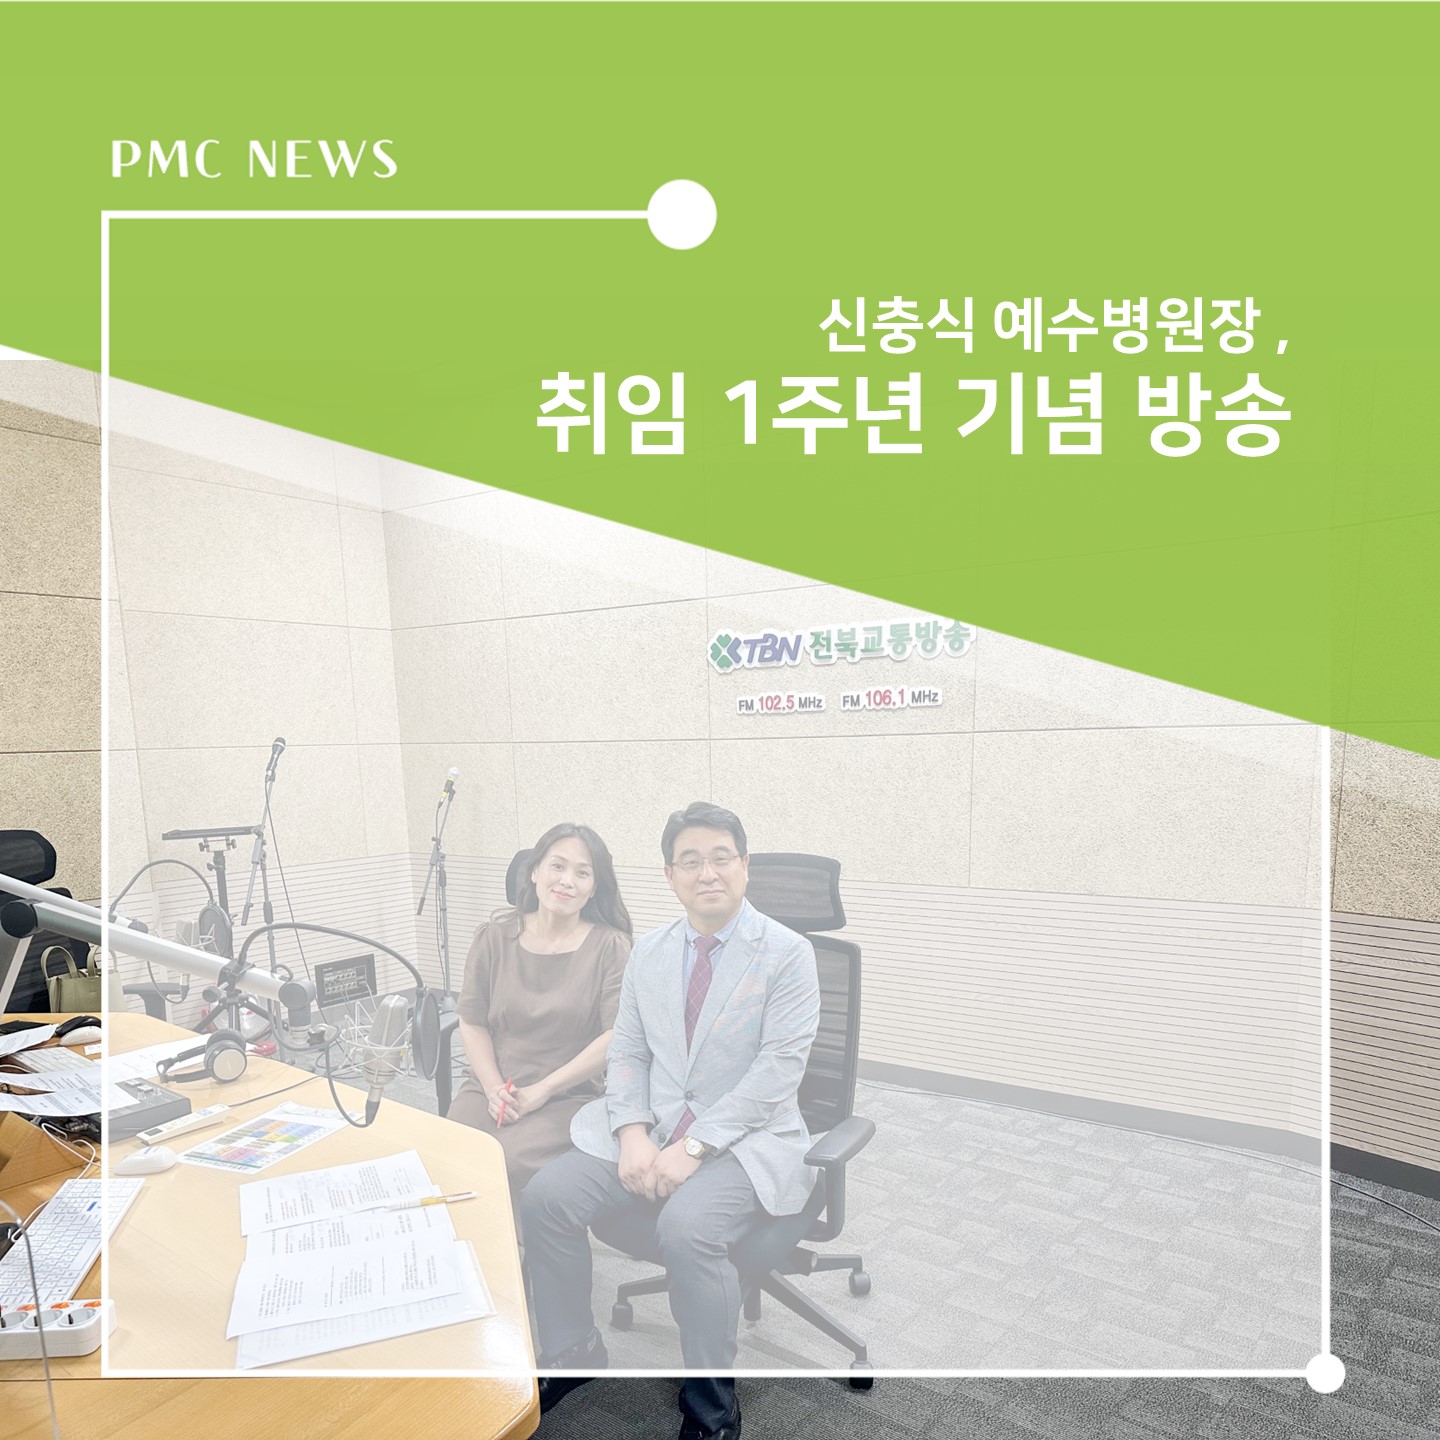 PMC NEWS
신충식 예수병원장,
취임 1주년 기념 방송
